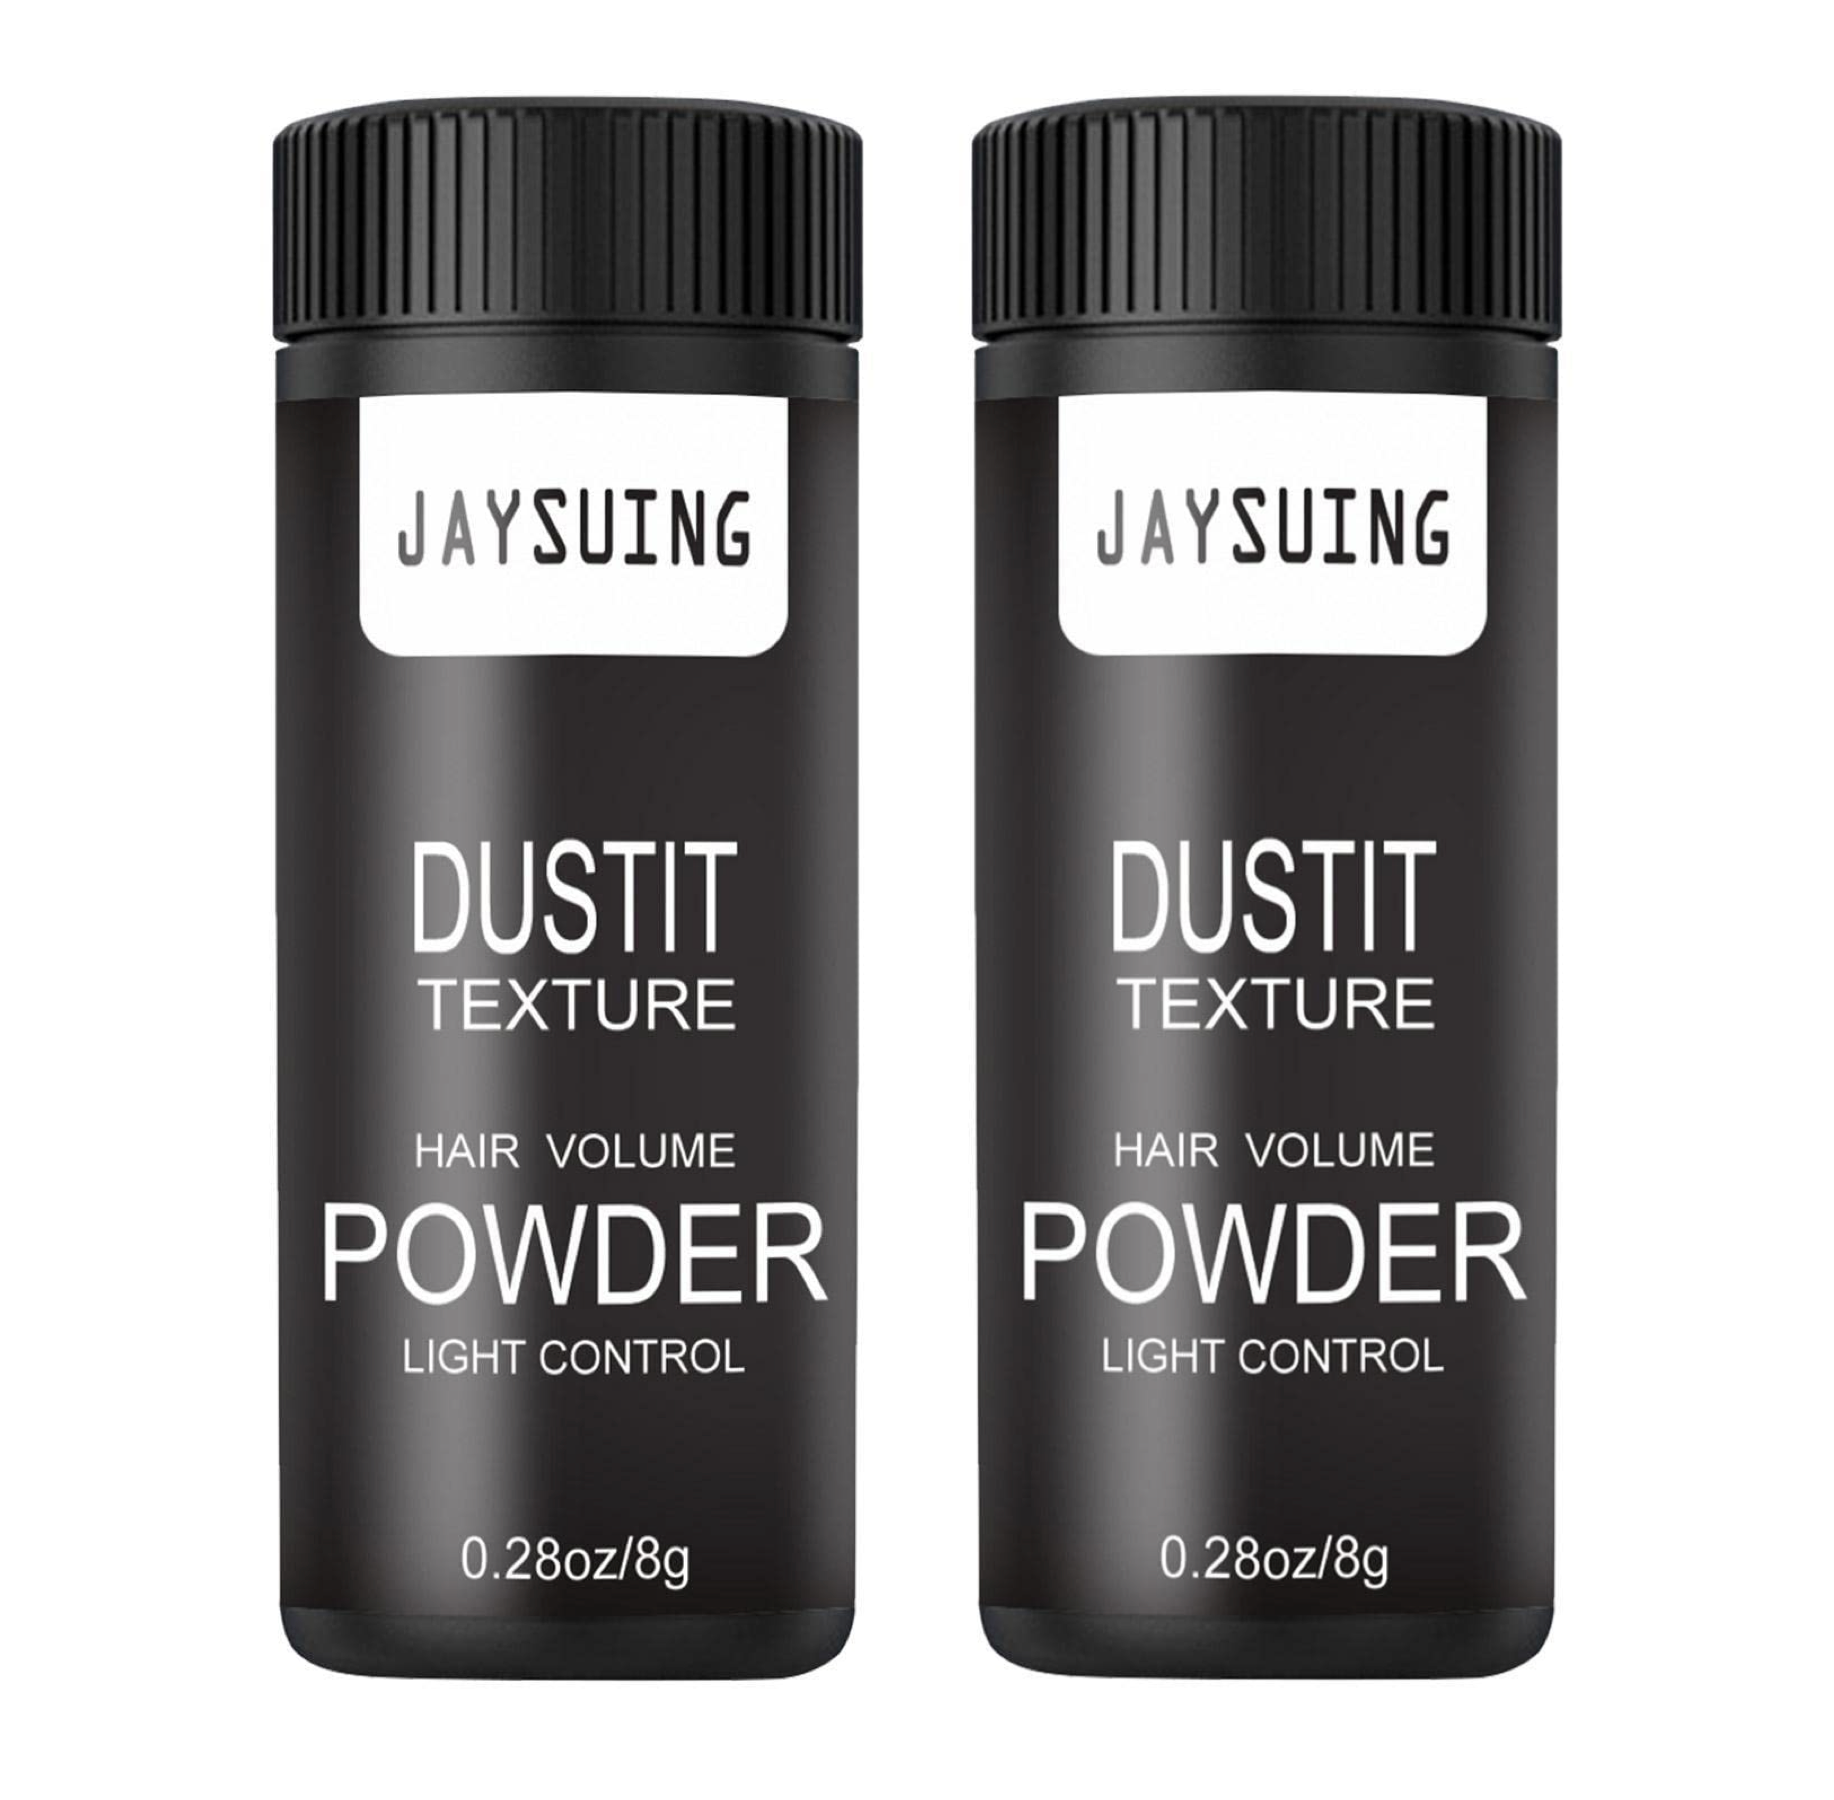 Jaysuing Dust It Texture Hair Volume Powder Light Control 8g duo